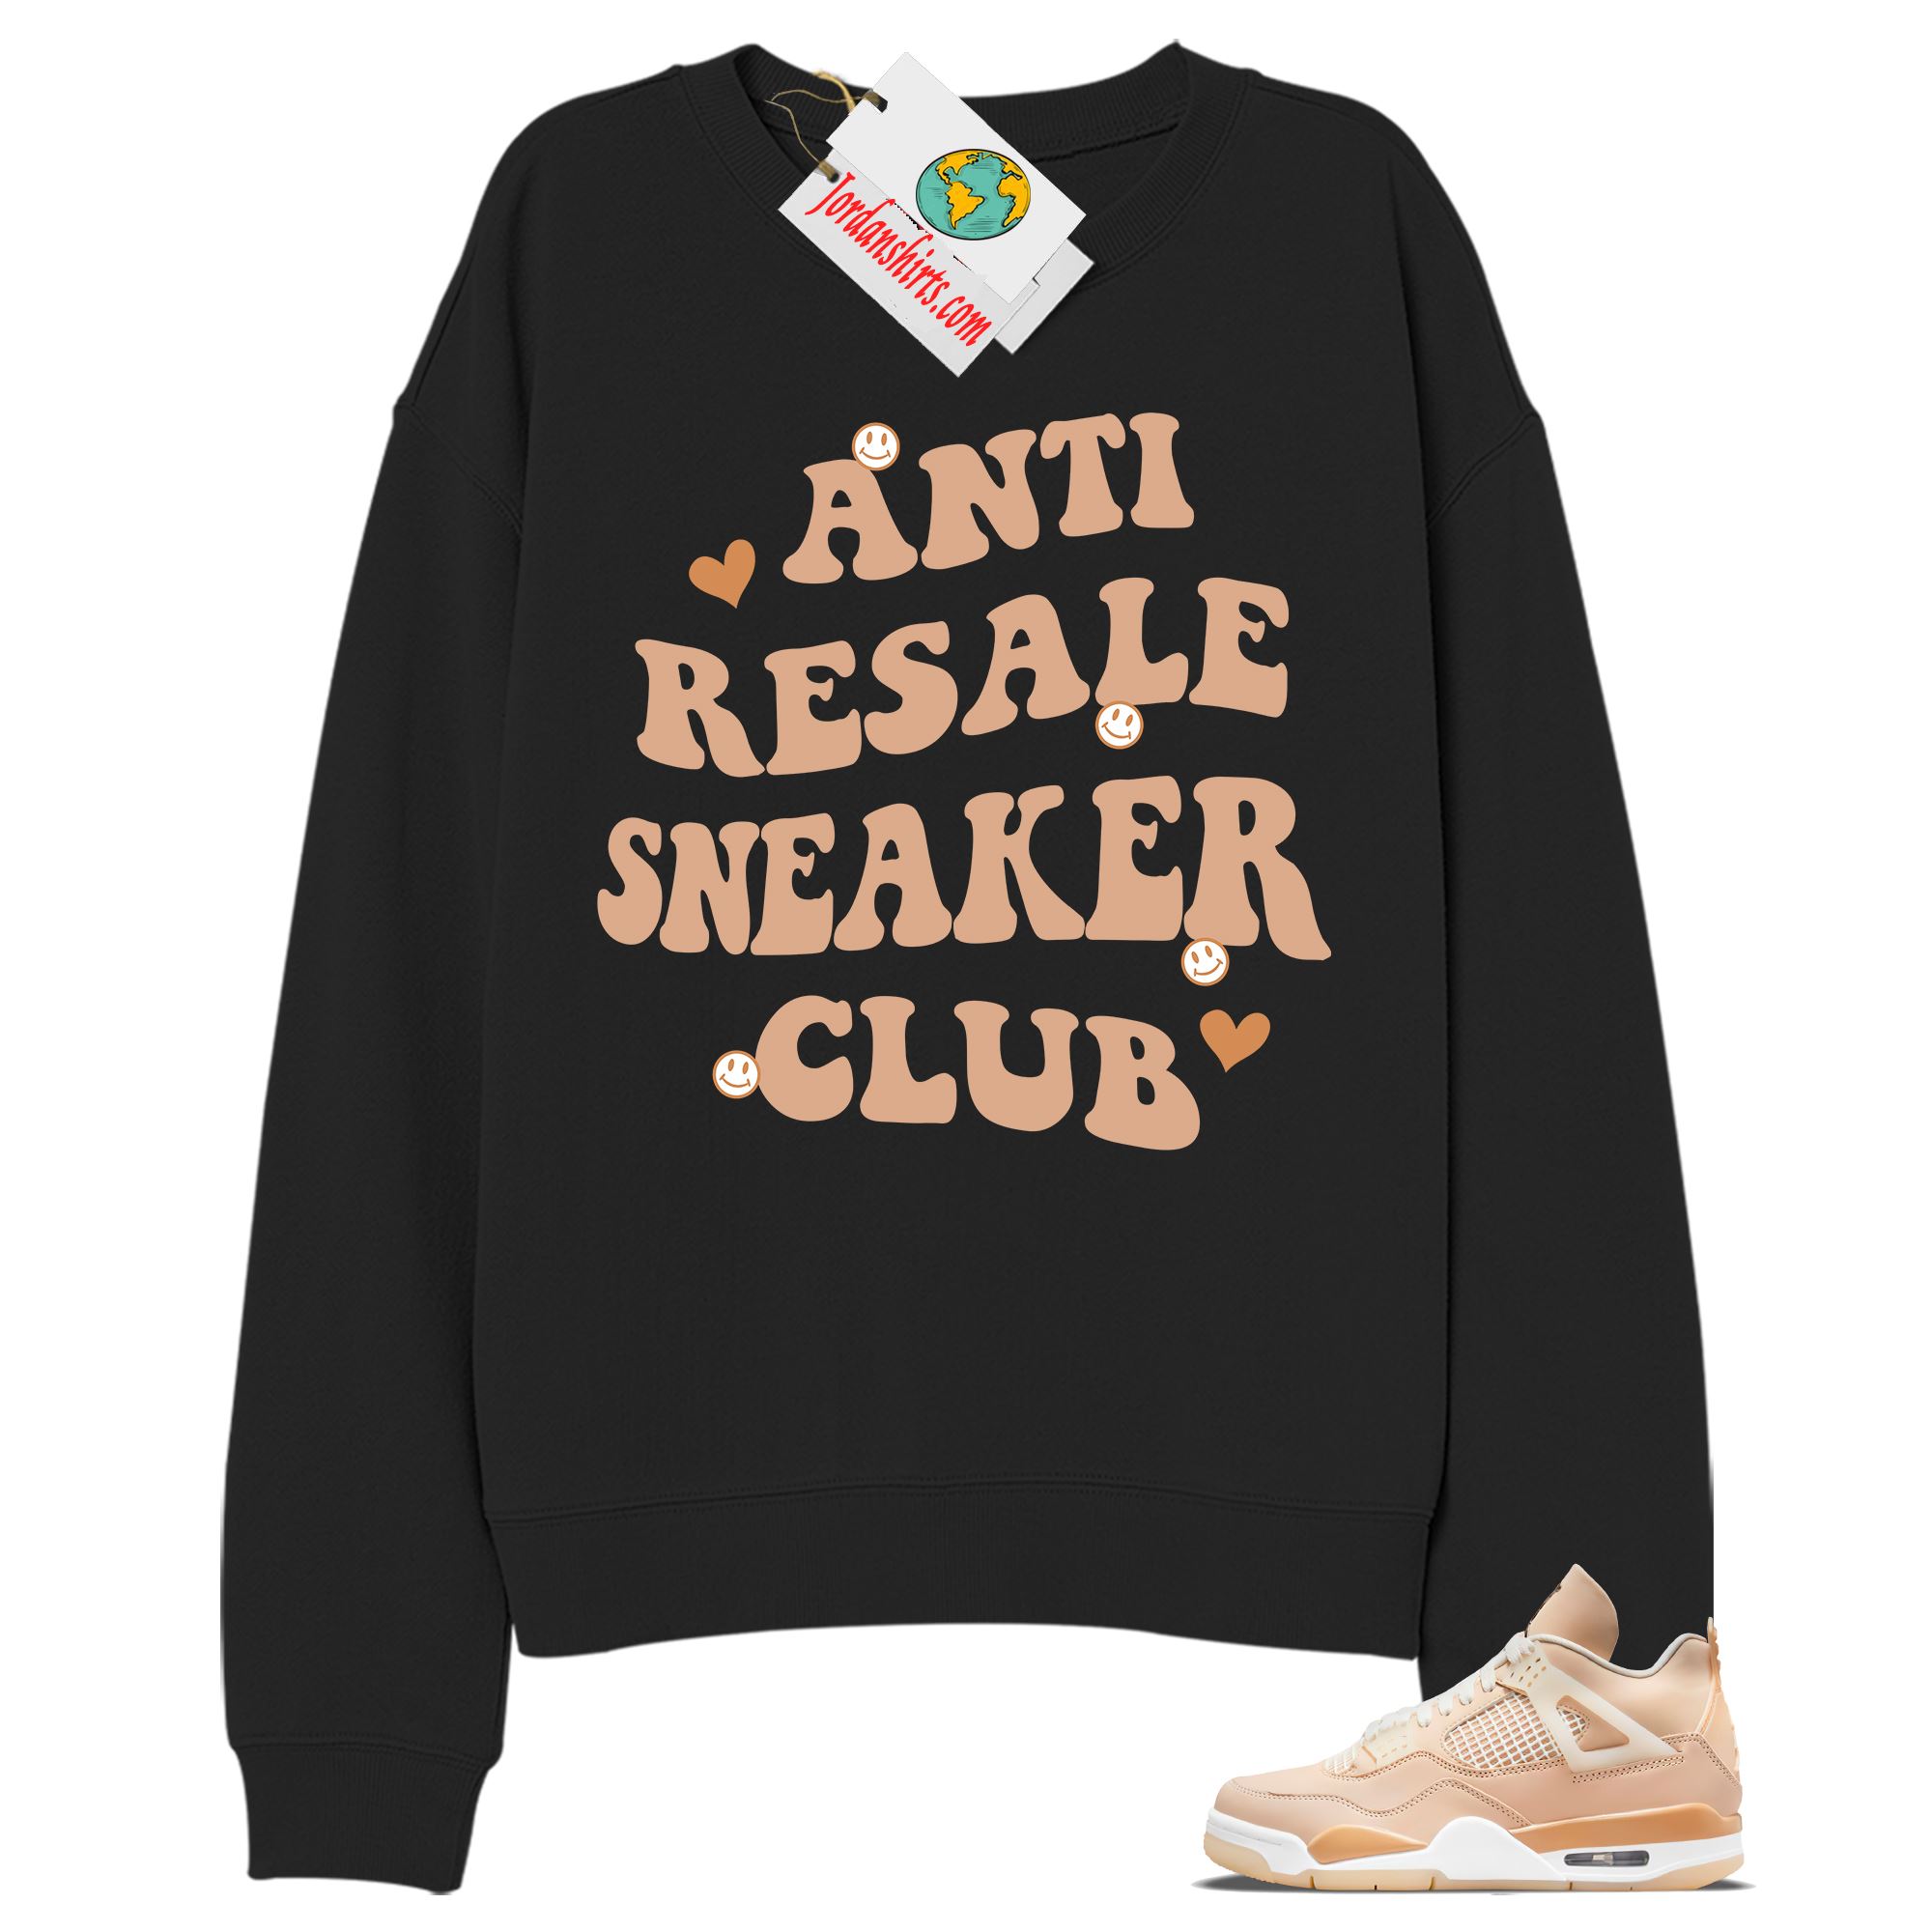 Jordan 4 Sweatshirt, Anti Resale Sneaker Club Black Sweatshirt Air Jordan 4 Shimmer 4s Size Up To 5xl